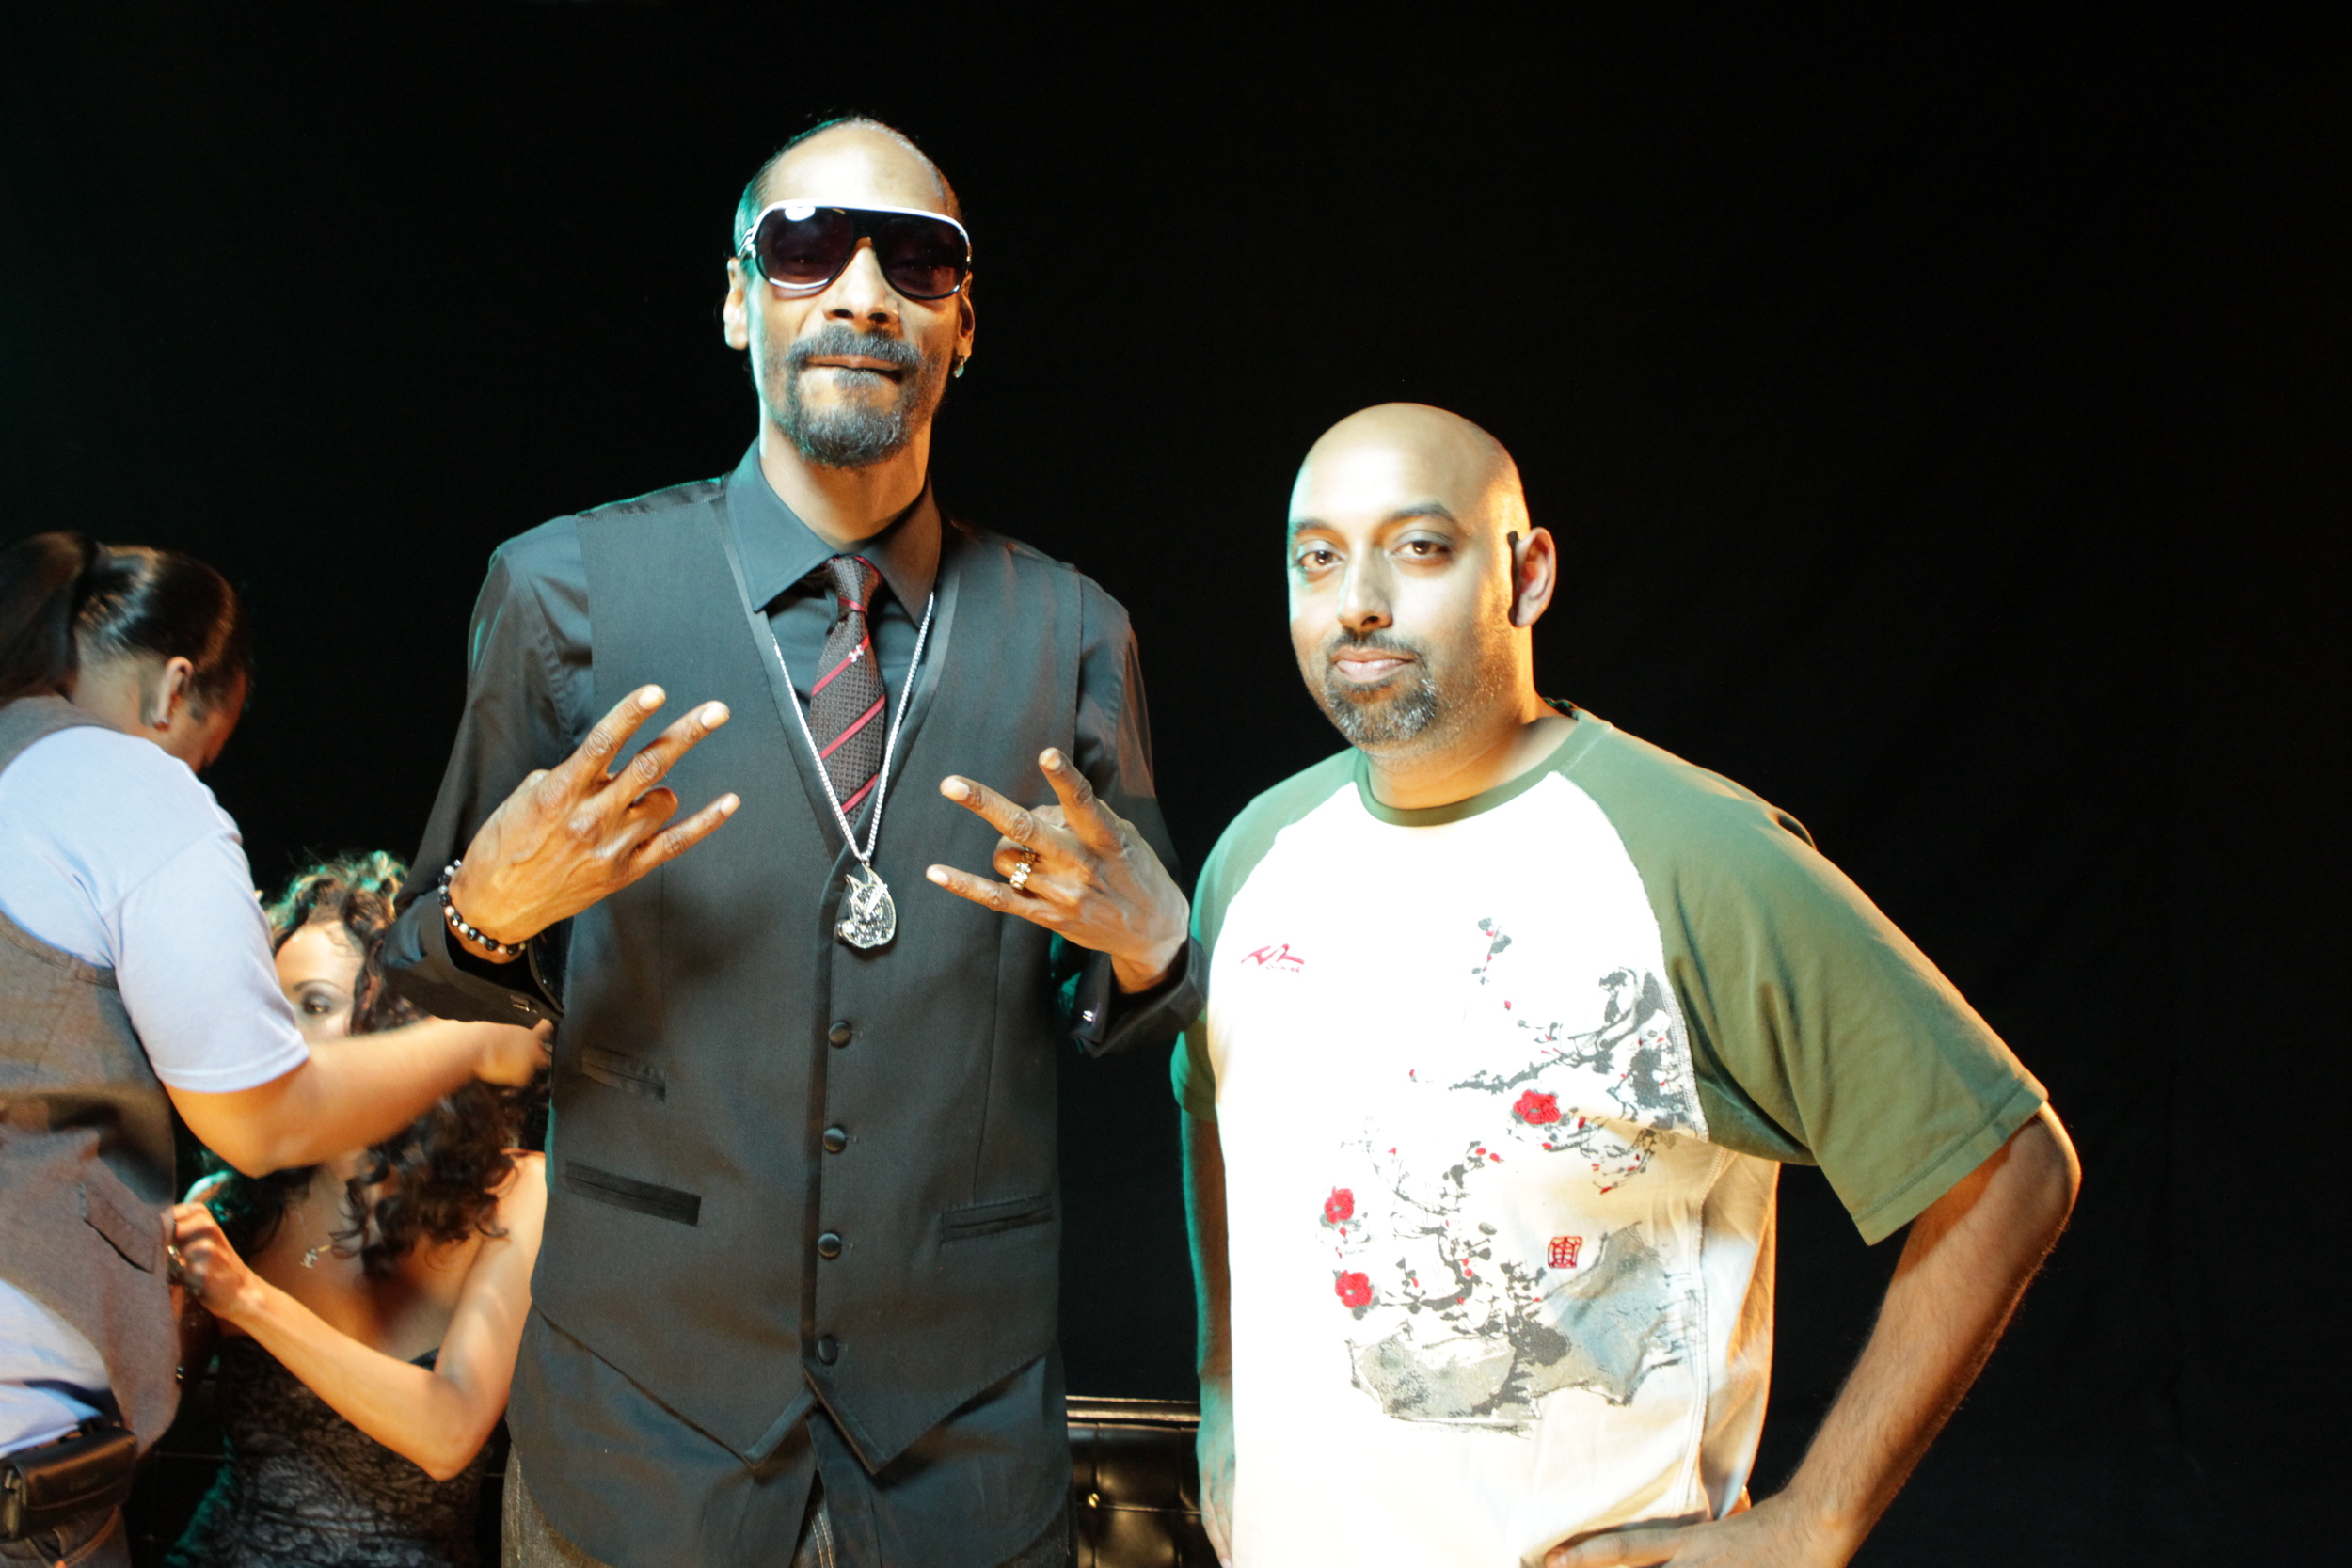 Fun with Snoop